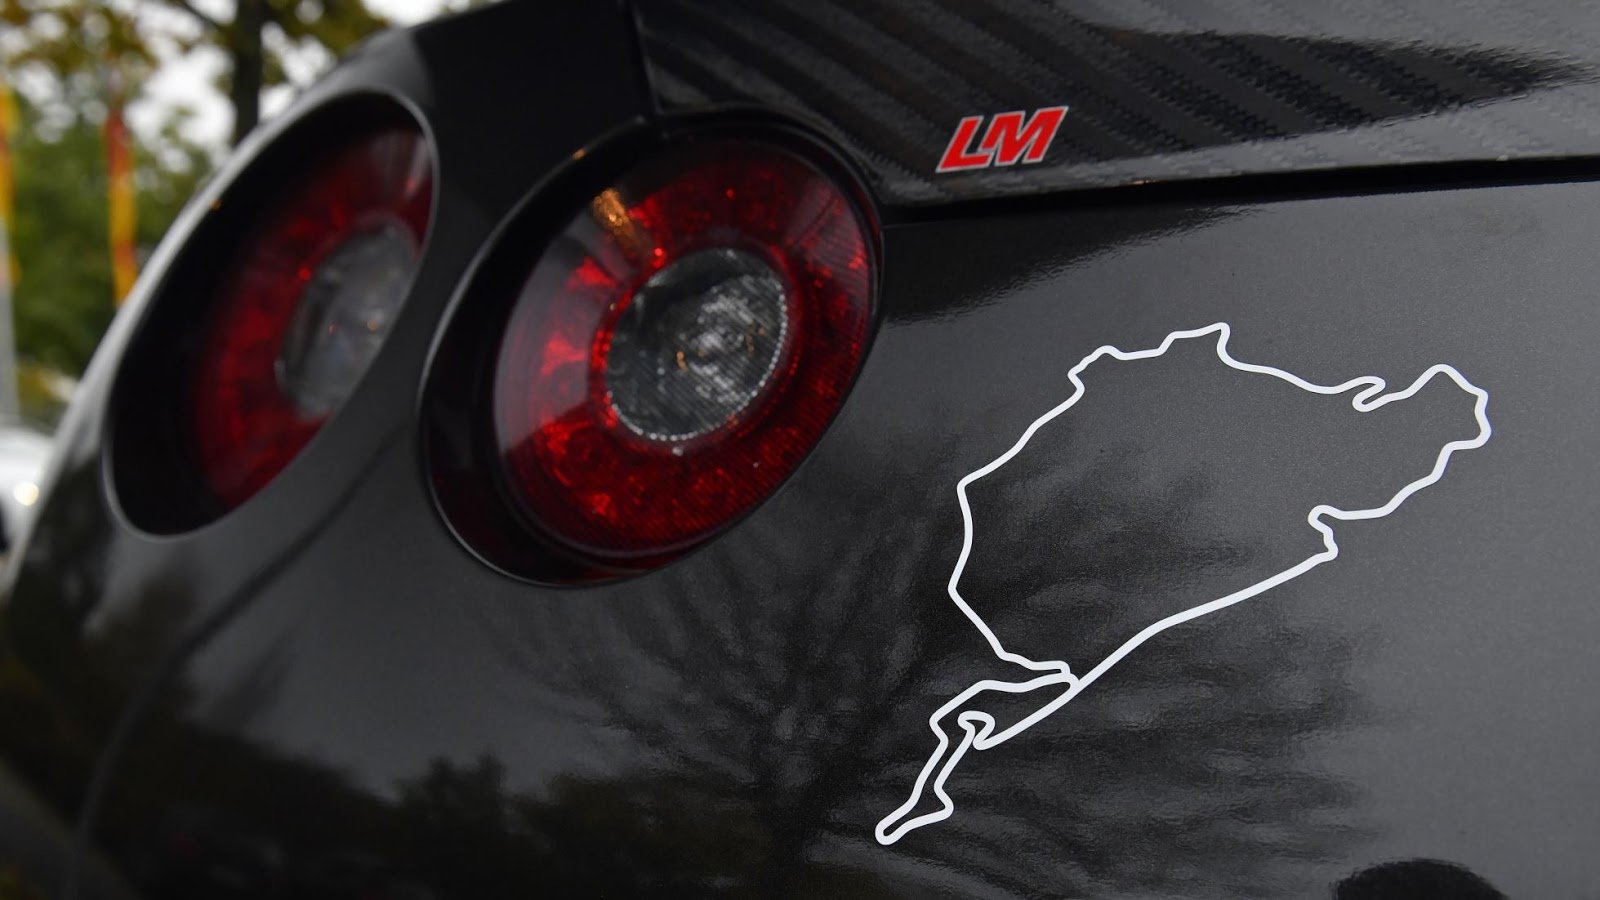 Nissan GT-R v úpravě LM1 RS GT-R